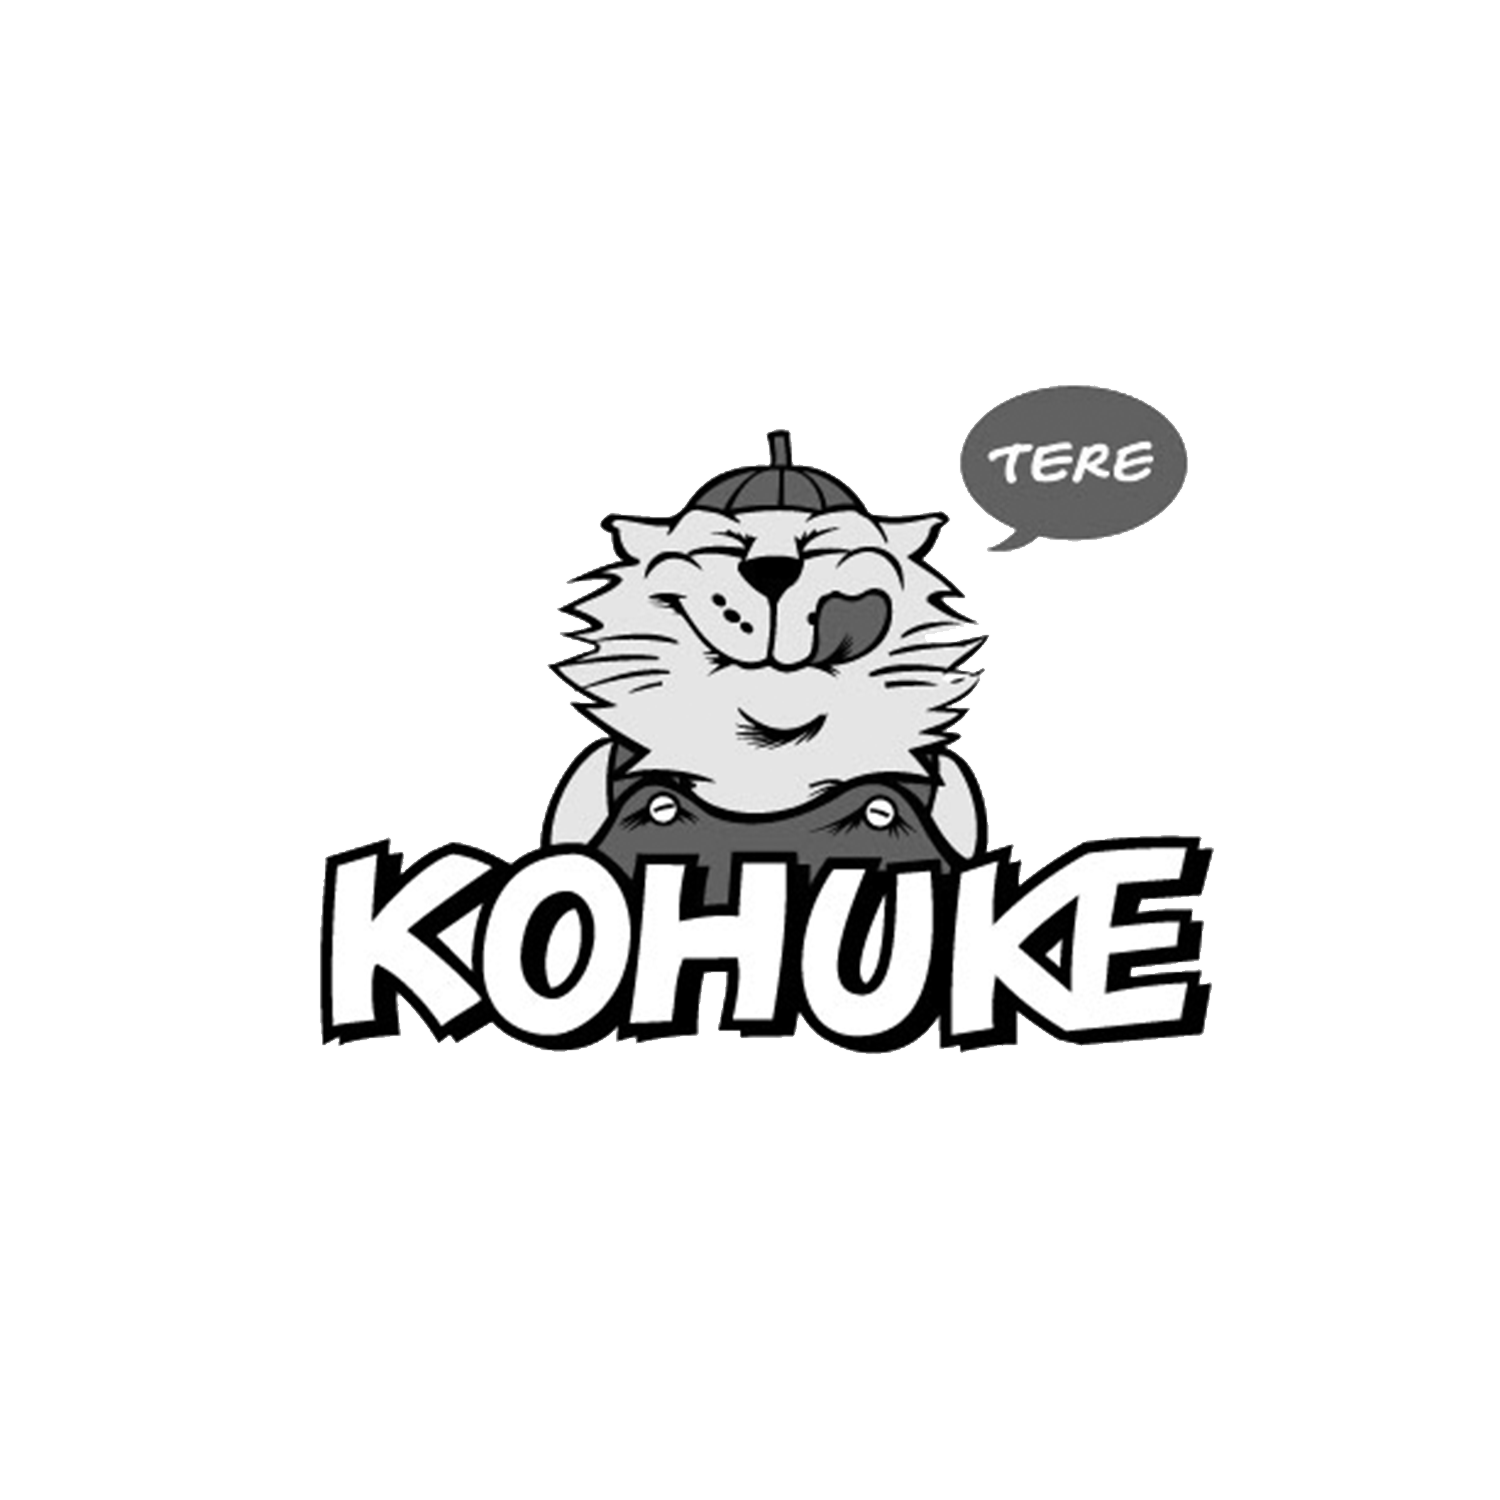 kohuke